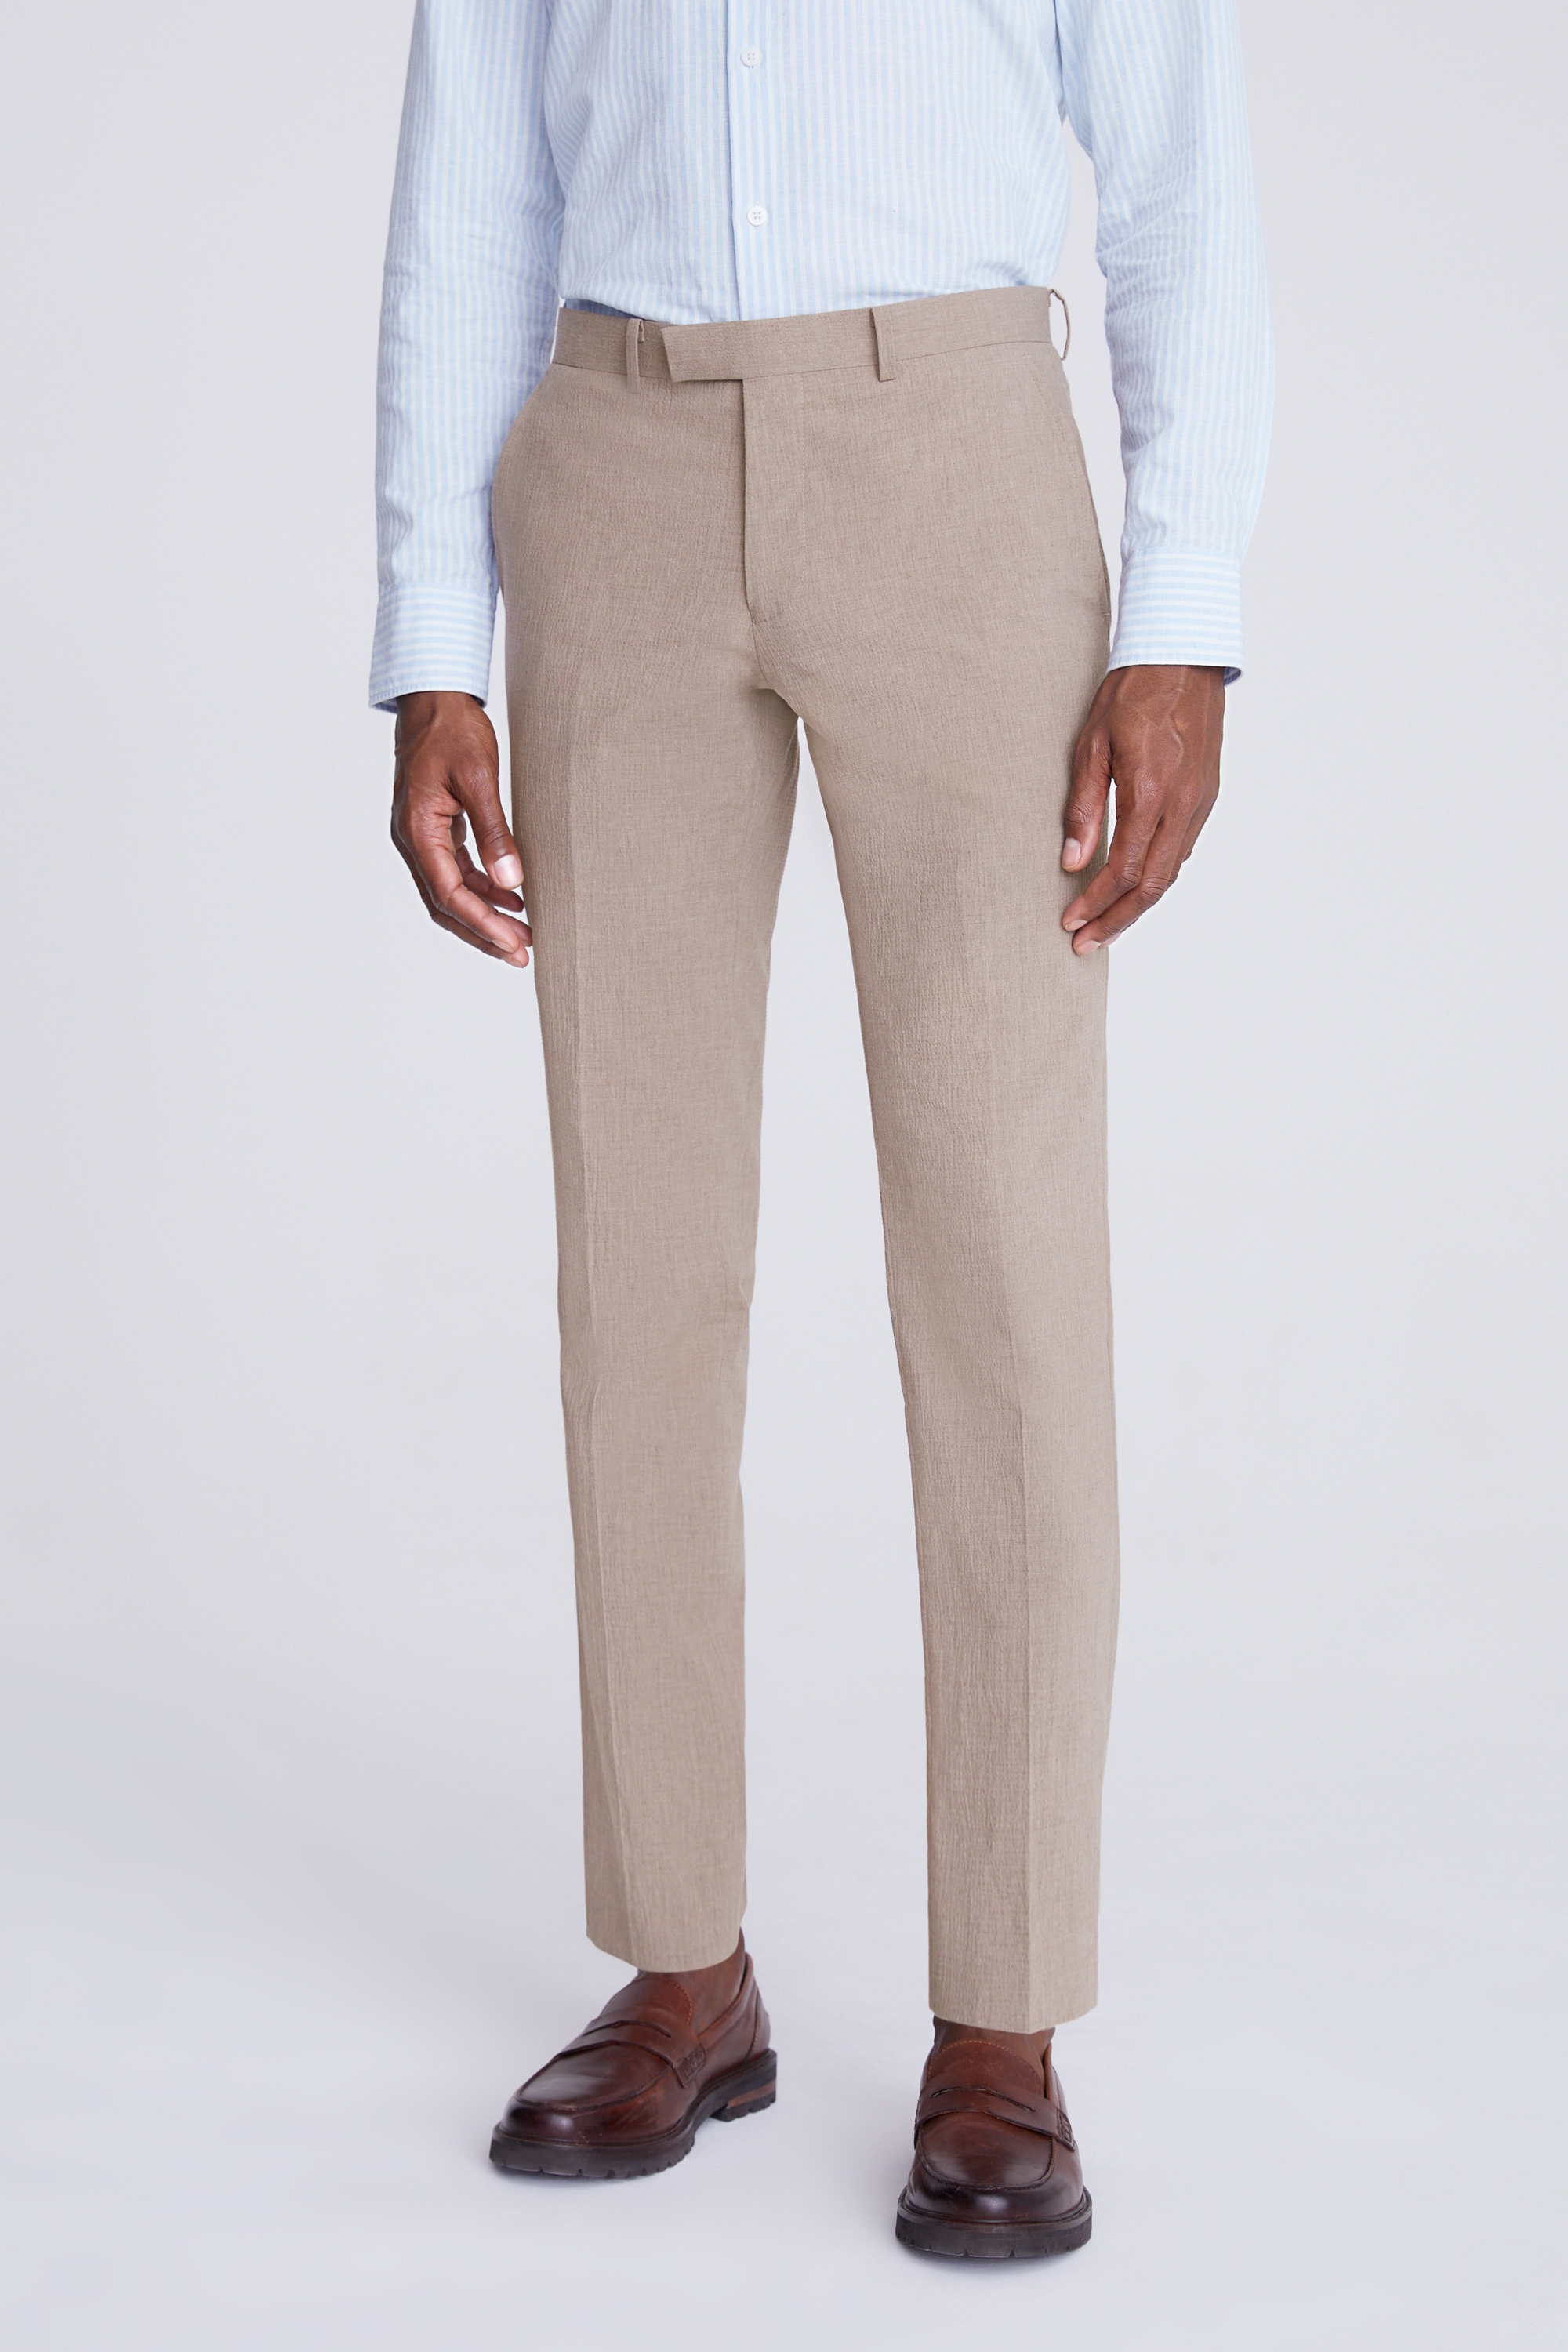 Slim Fit Taupe Seersucker Trousers | Buy Online at Moss